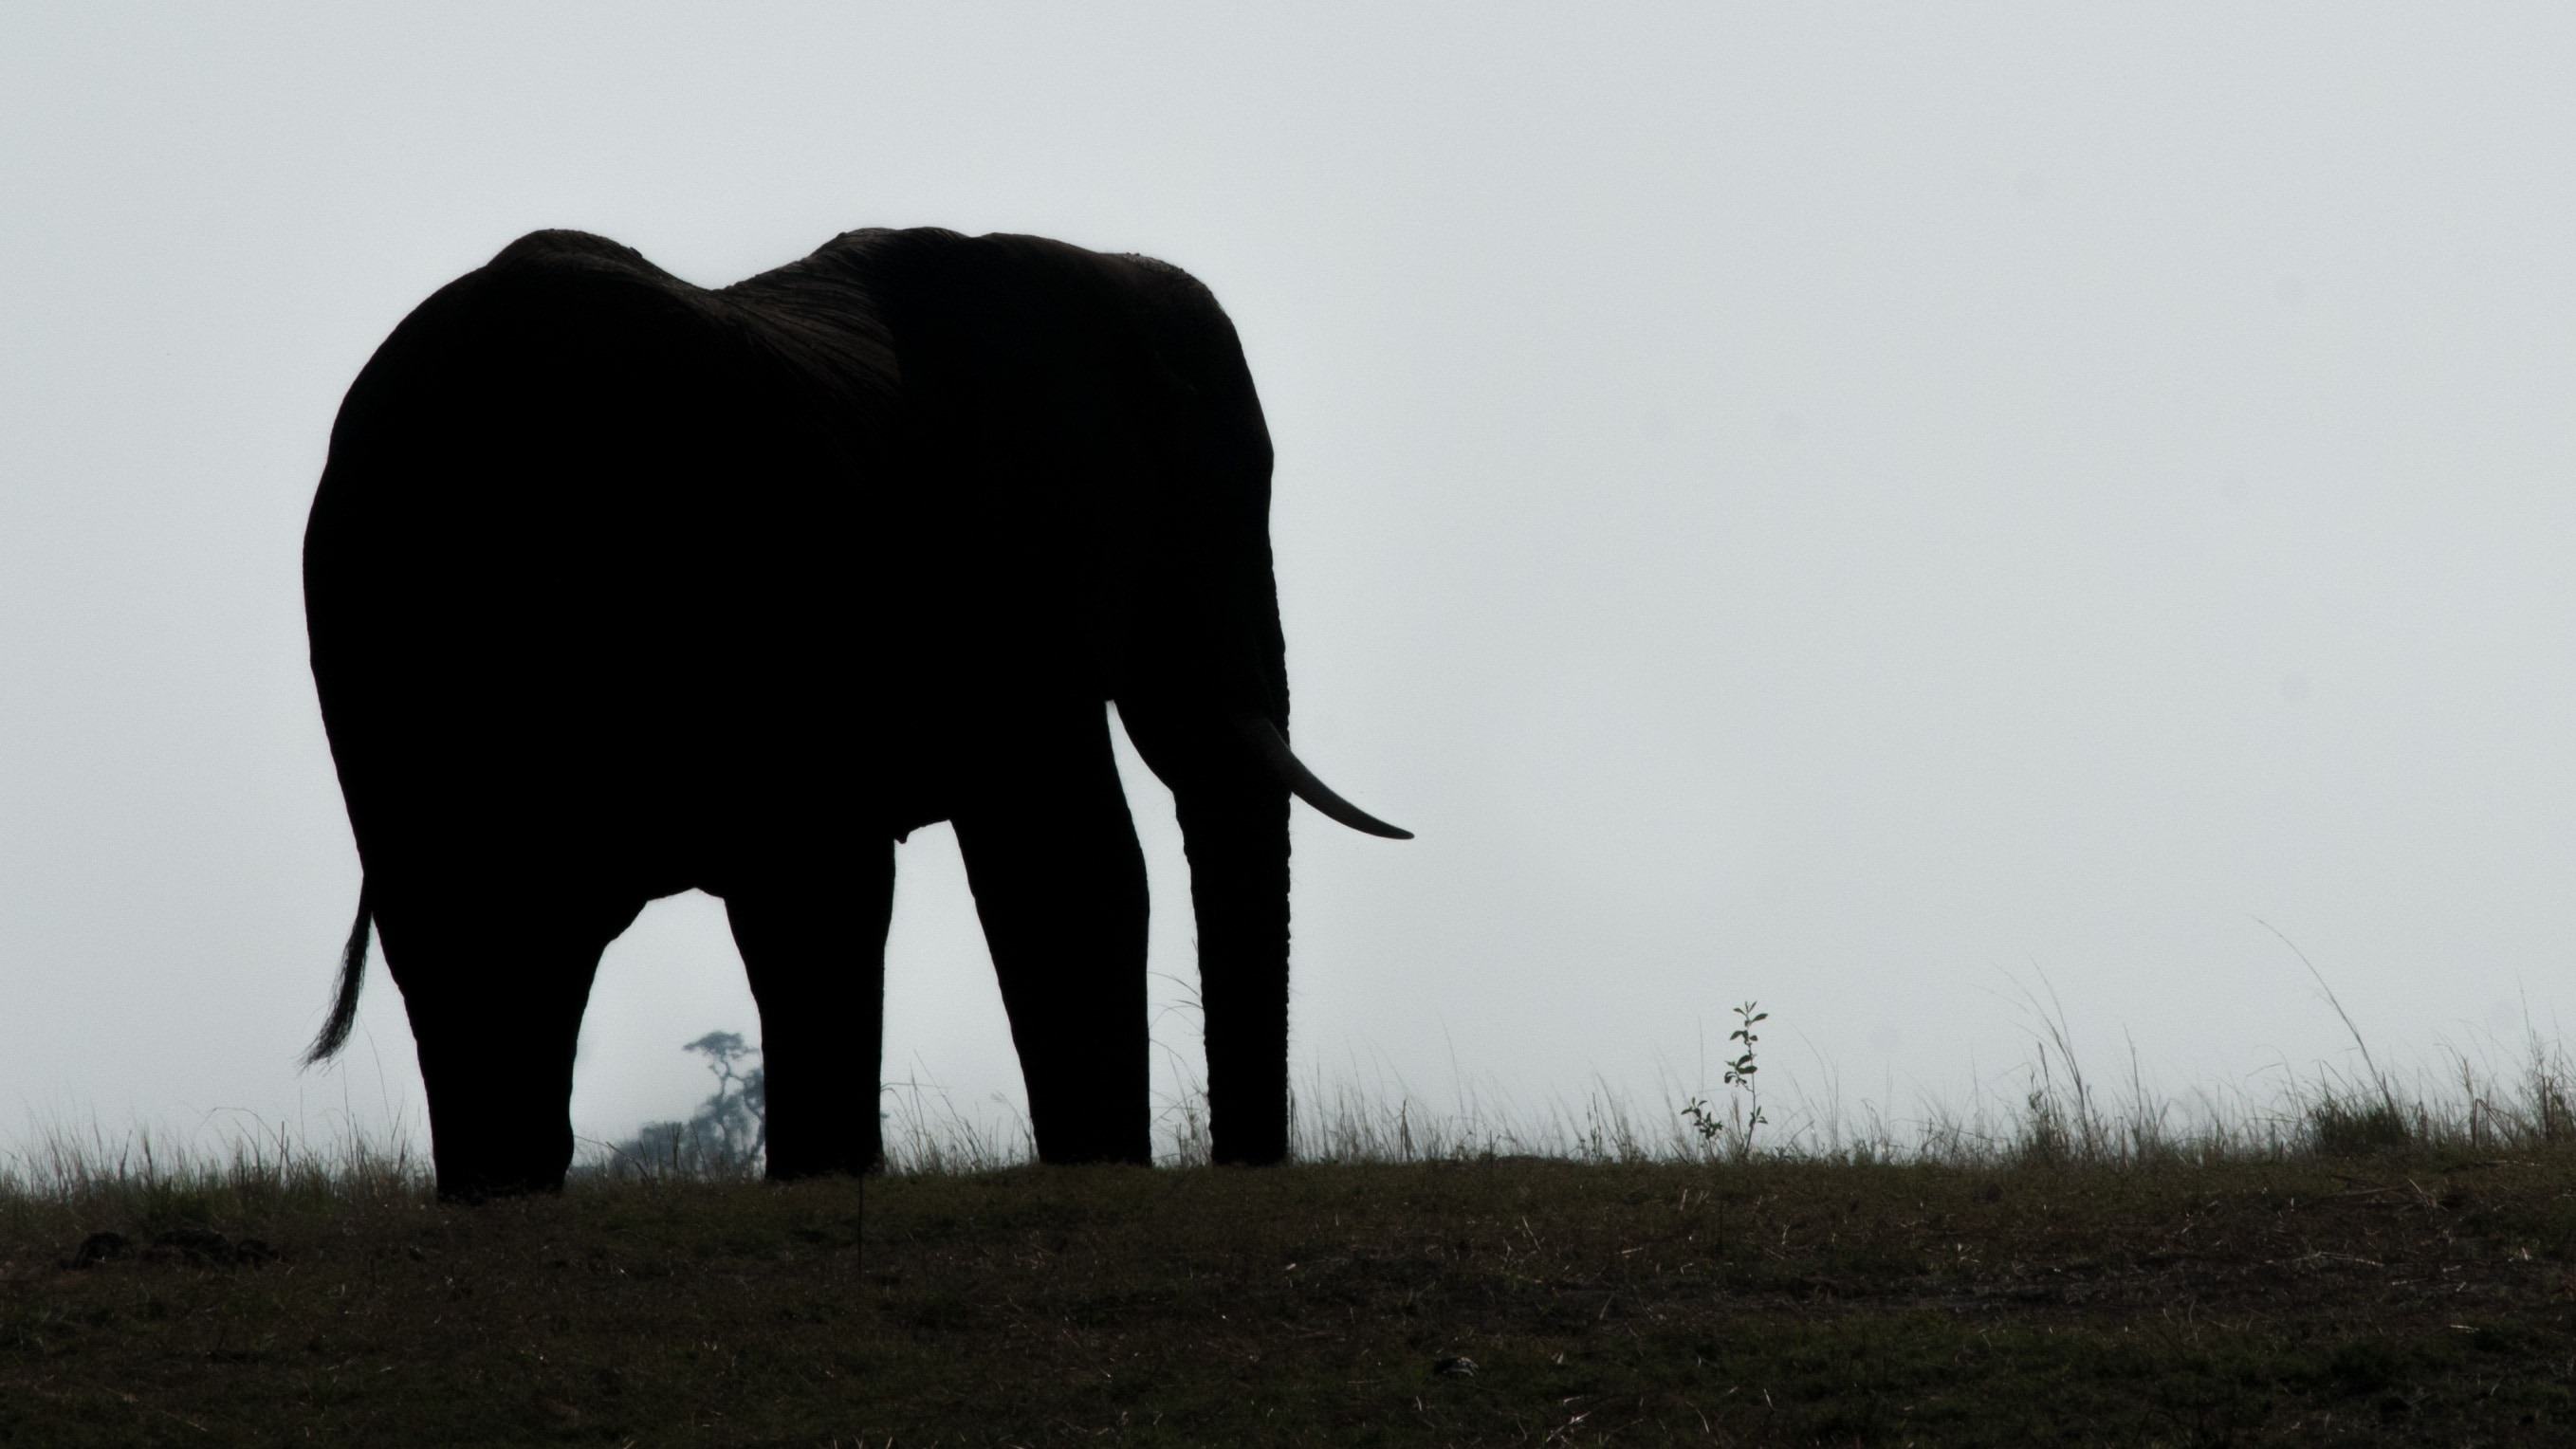 silhouette elephant